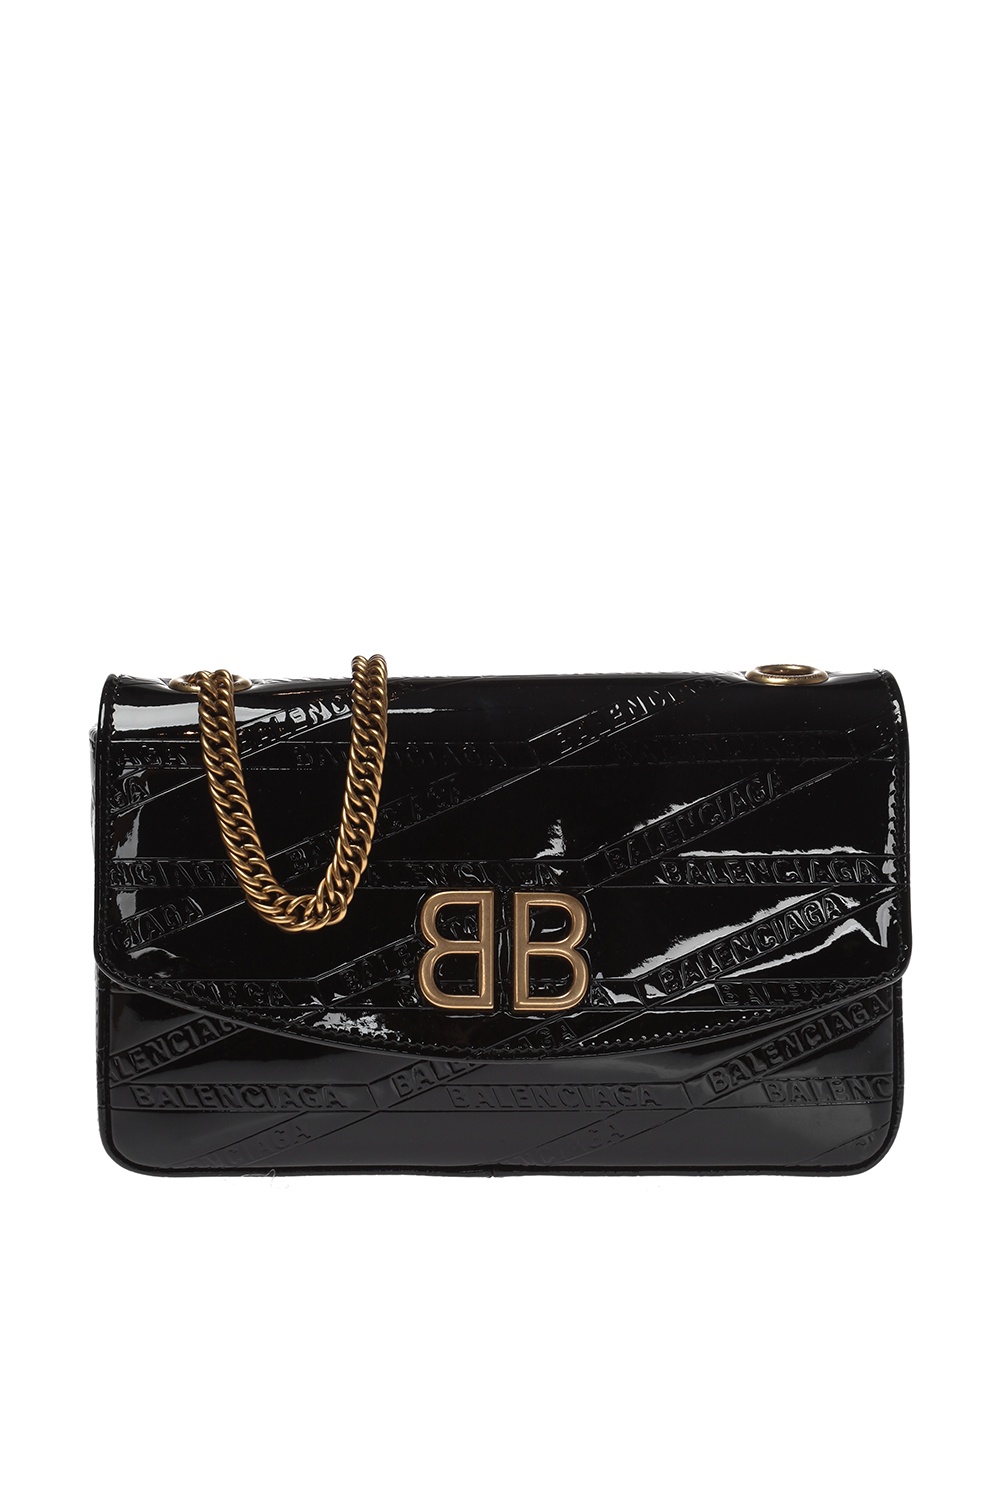 Balenciaga 'BB' branded shoulder bag | Women's Bags | Vitkac